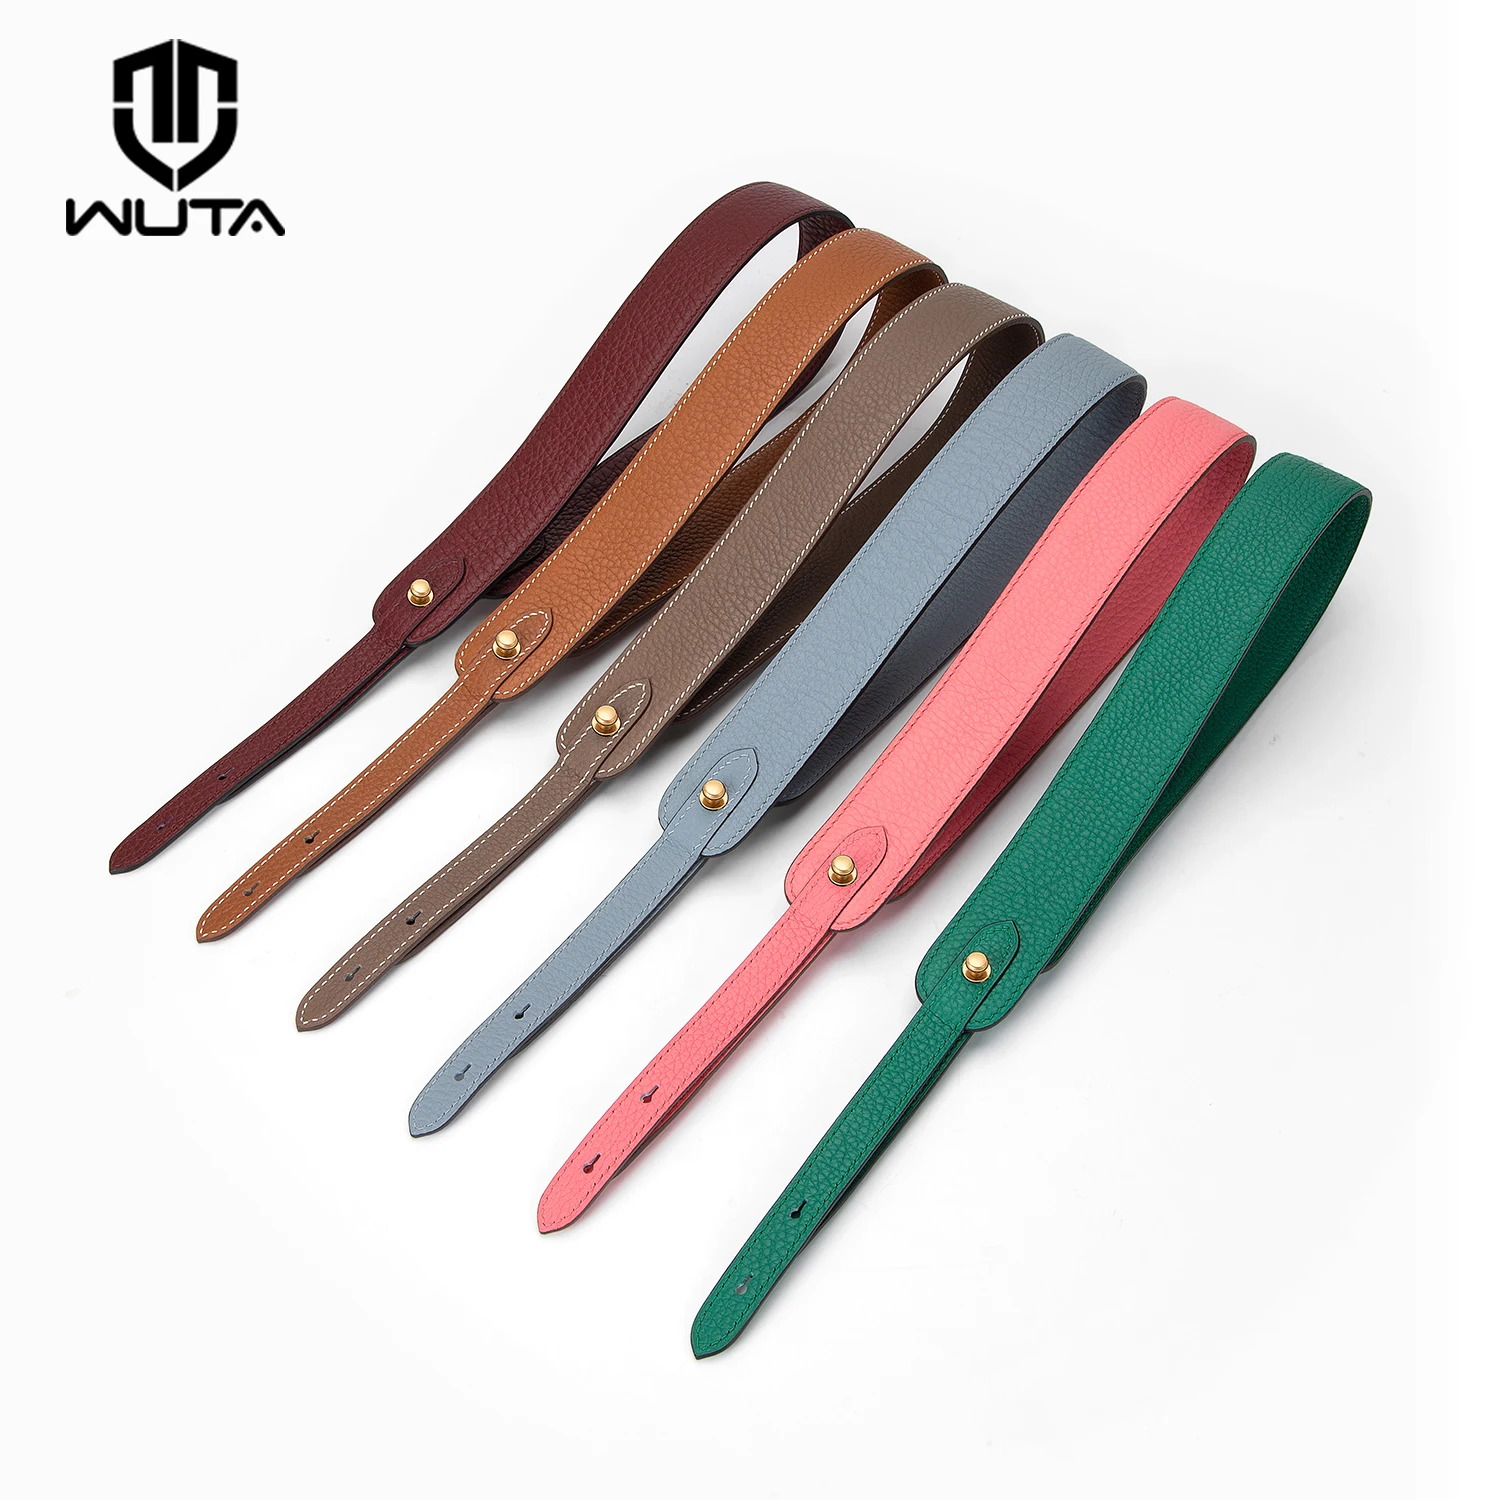 WUTA Luxury Genuine Leather Bag Strap For Hermes Picotin Adjustable Shoulder Straps Replacement Handbag Belts Bag Accessories